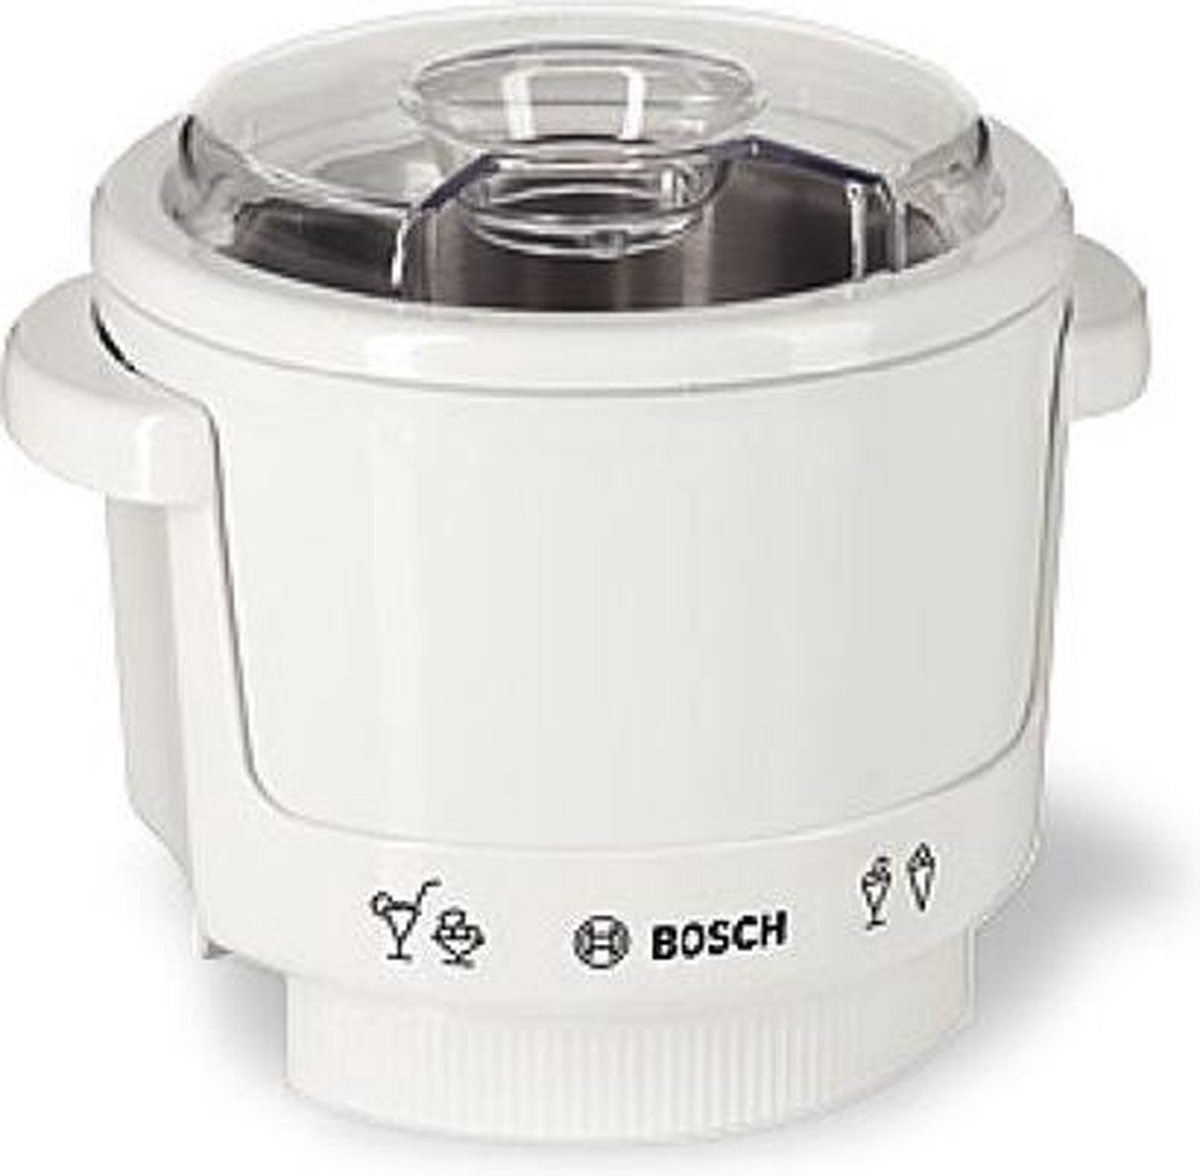 Bosch MUM4409 - Keukenmachine - Wit | bol.com